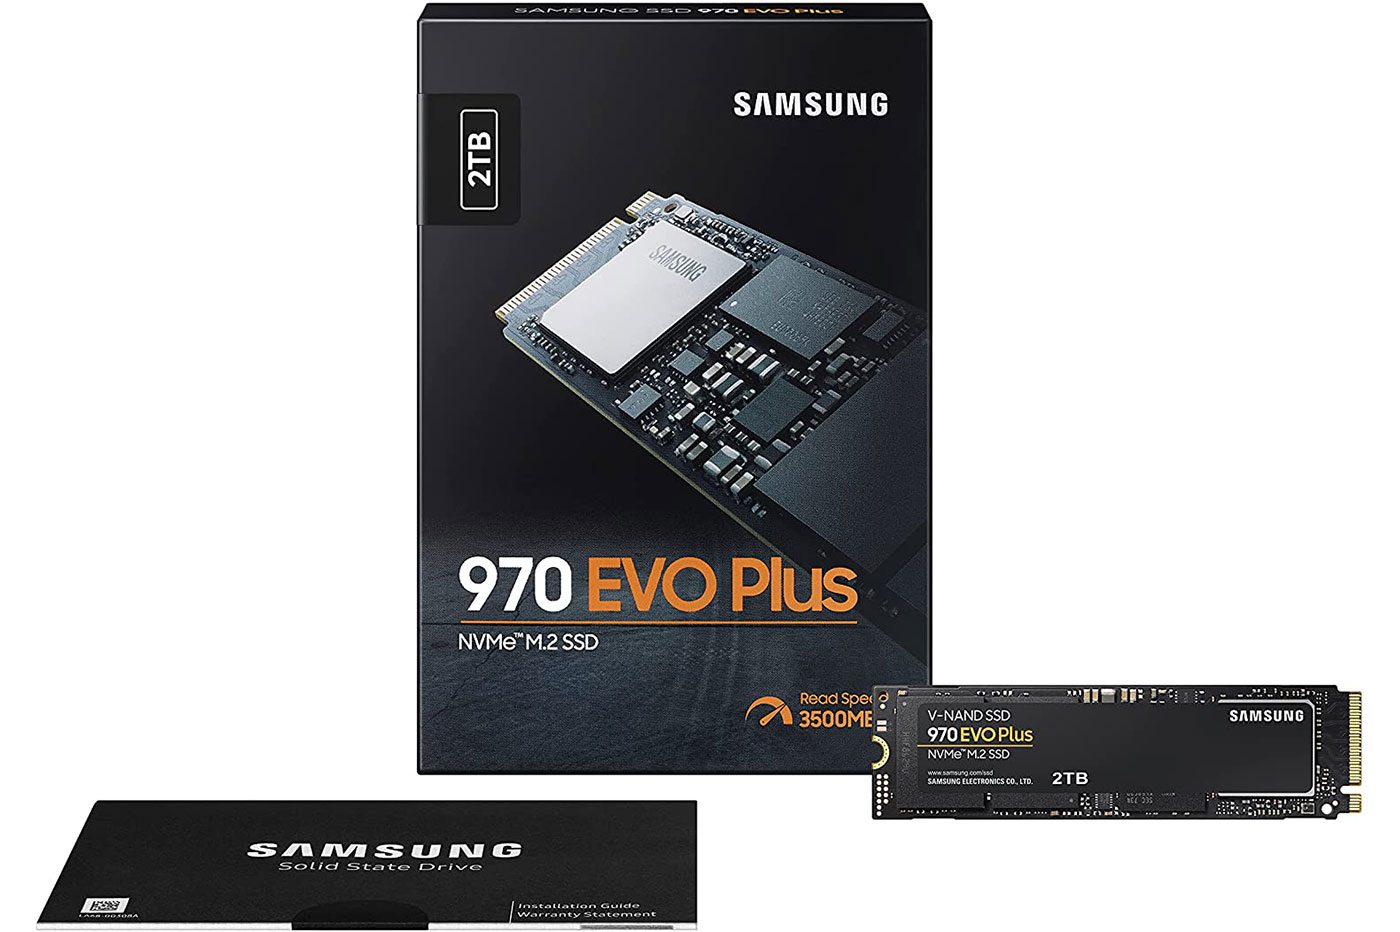 https://www.01net.com/app/uploads/2022/06/Samsung-EVO-970-Plus.jpg